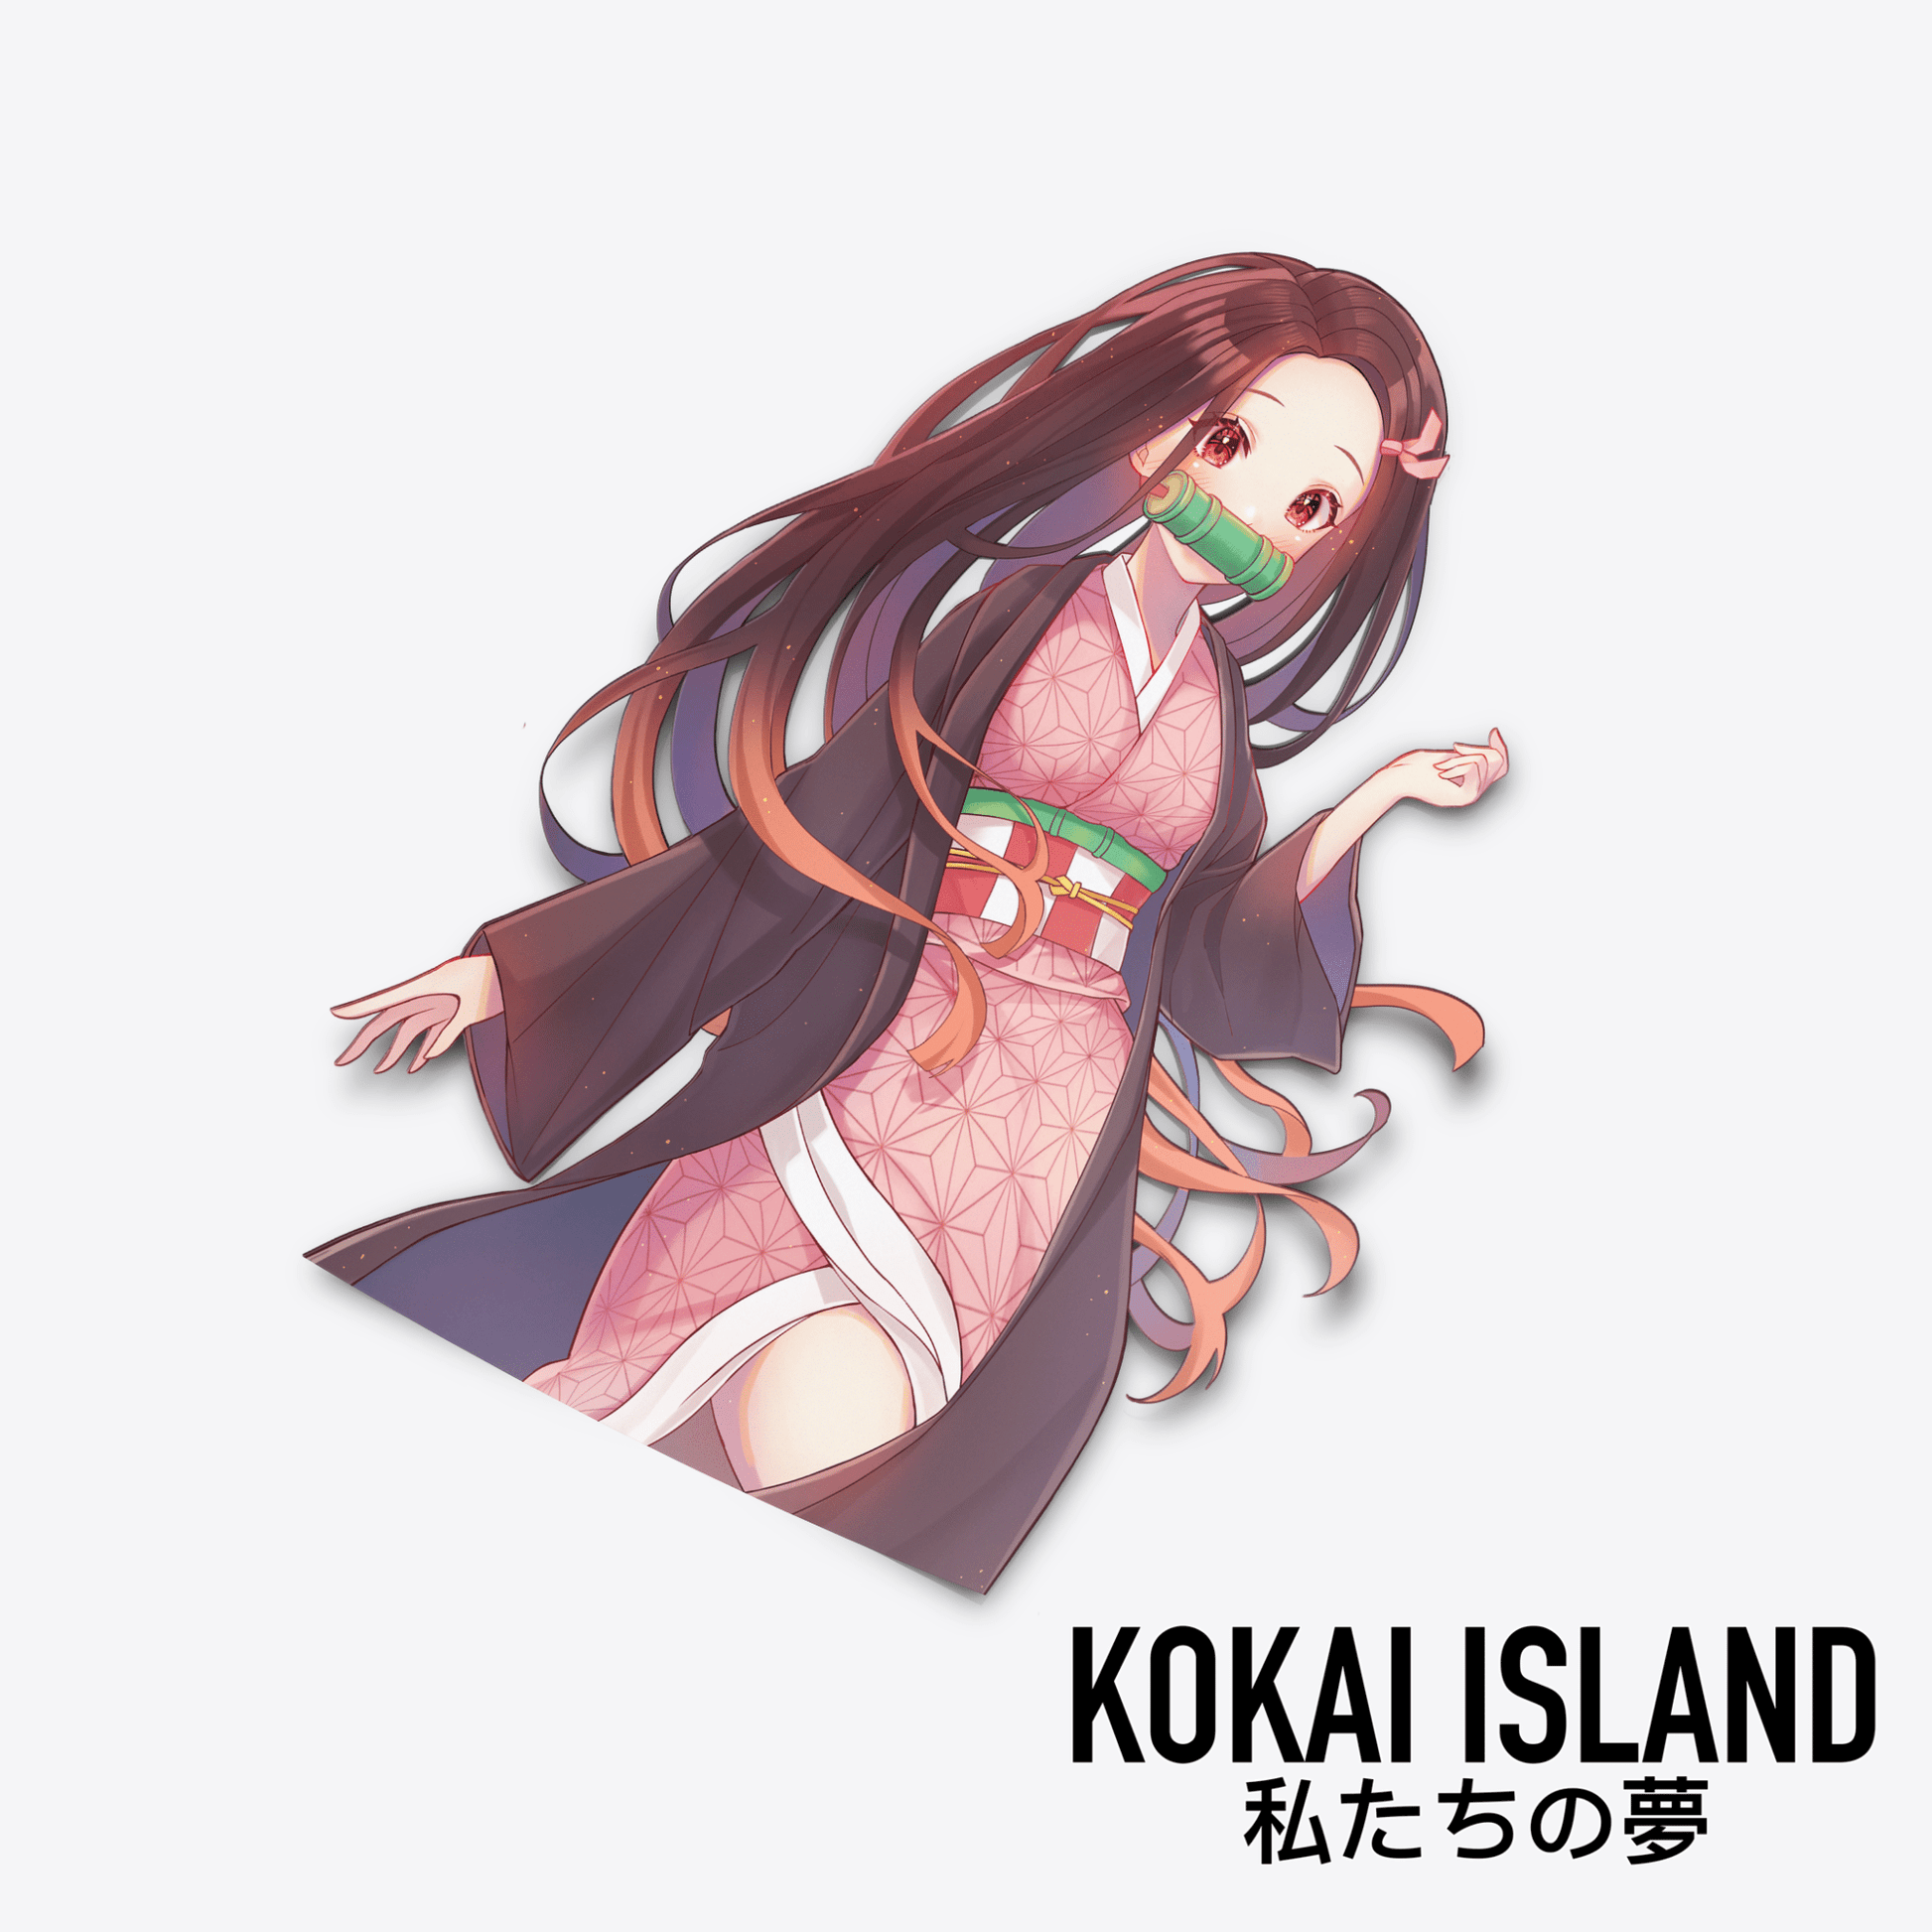 Demon Girl DecalDecalKokai Island